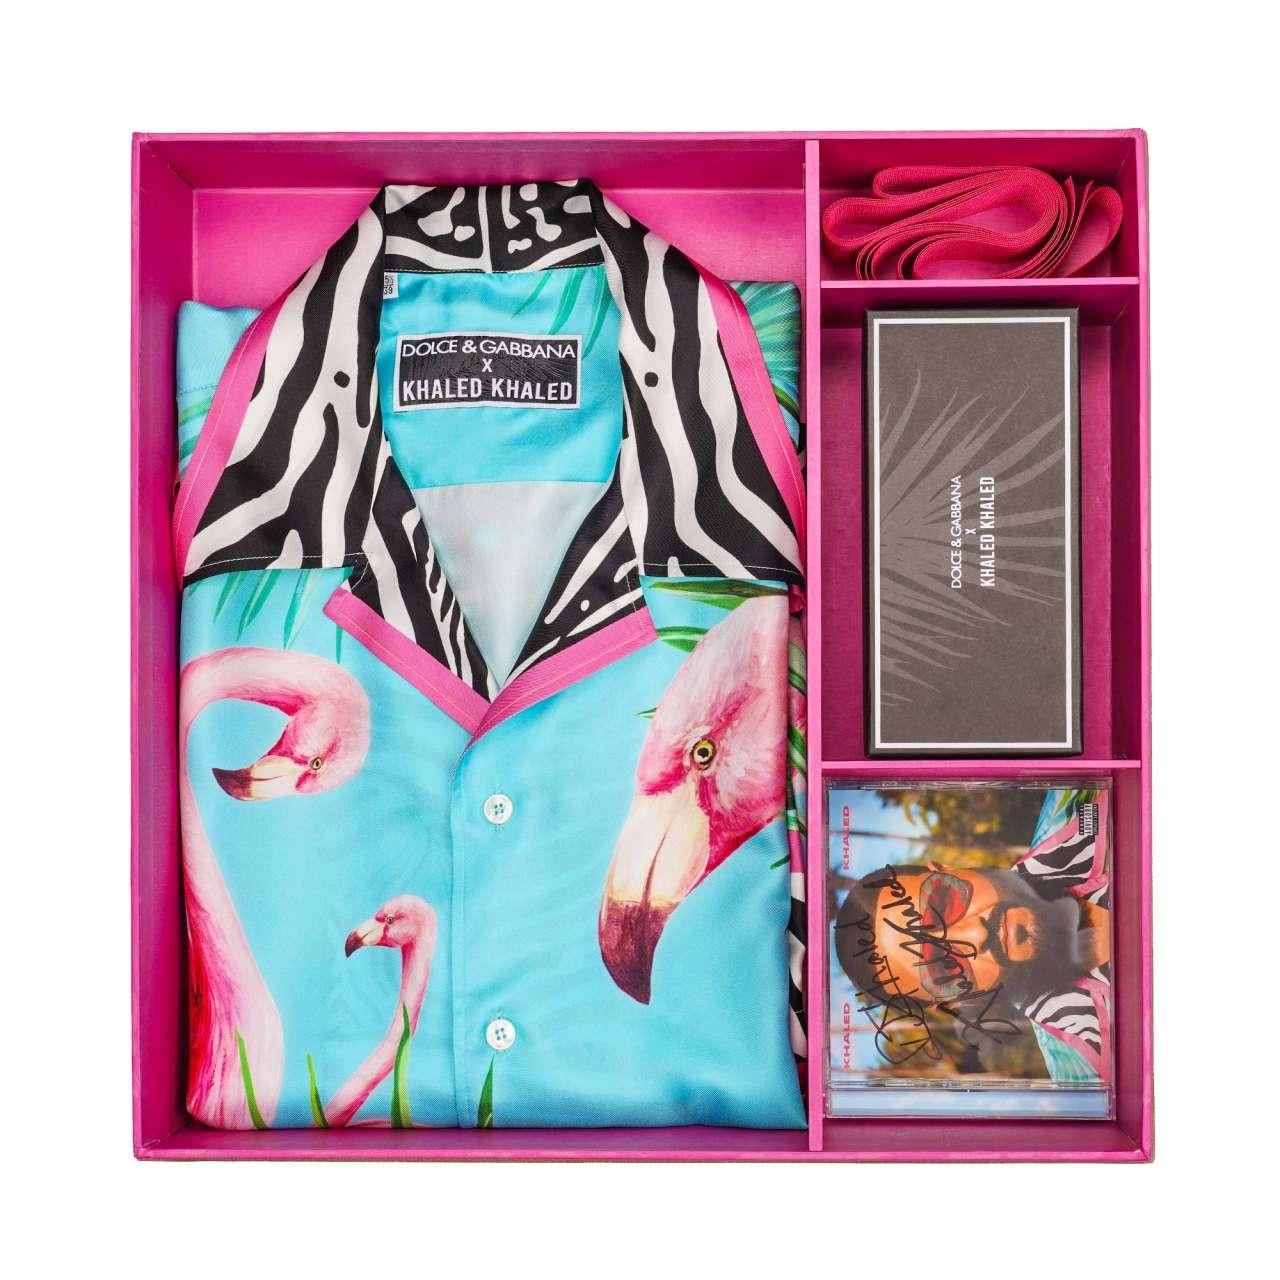 Dolce & Gabbana - DJ Khaled Silk Flamingo Zebra Shirt with Sunglasses and CD 42 For Sale 4